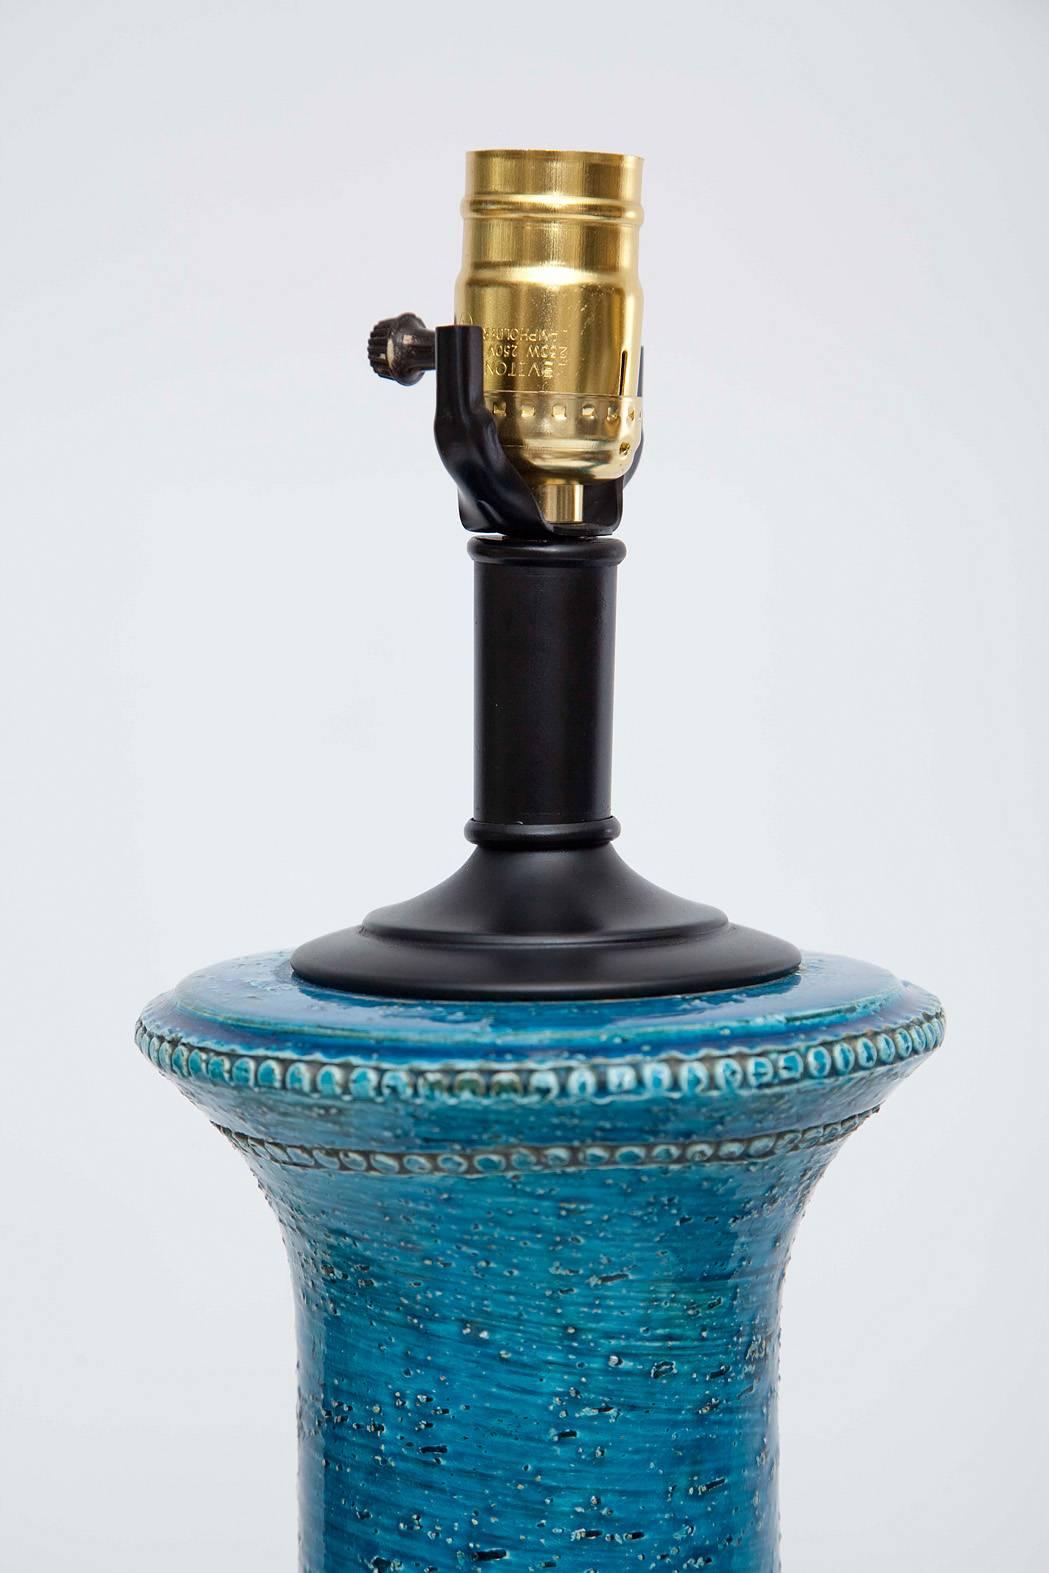 Vivid turquoise glazed ceramic lamps on black metal bases, designed by Aldo Londi for Bitossi.